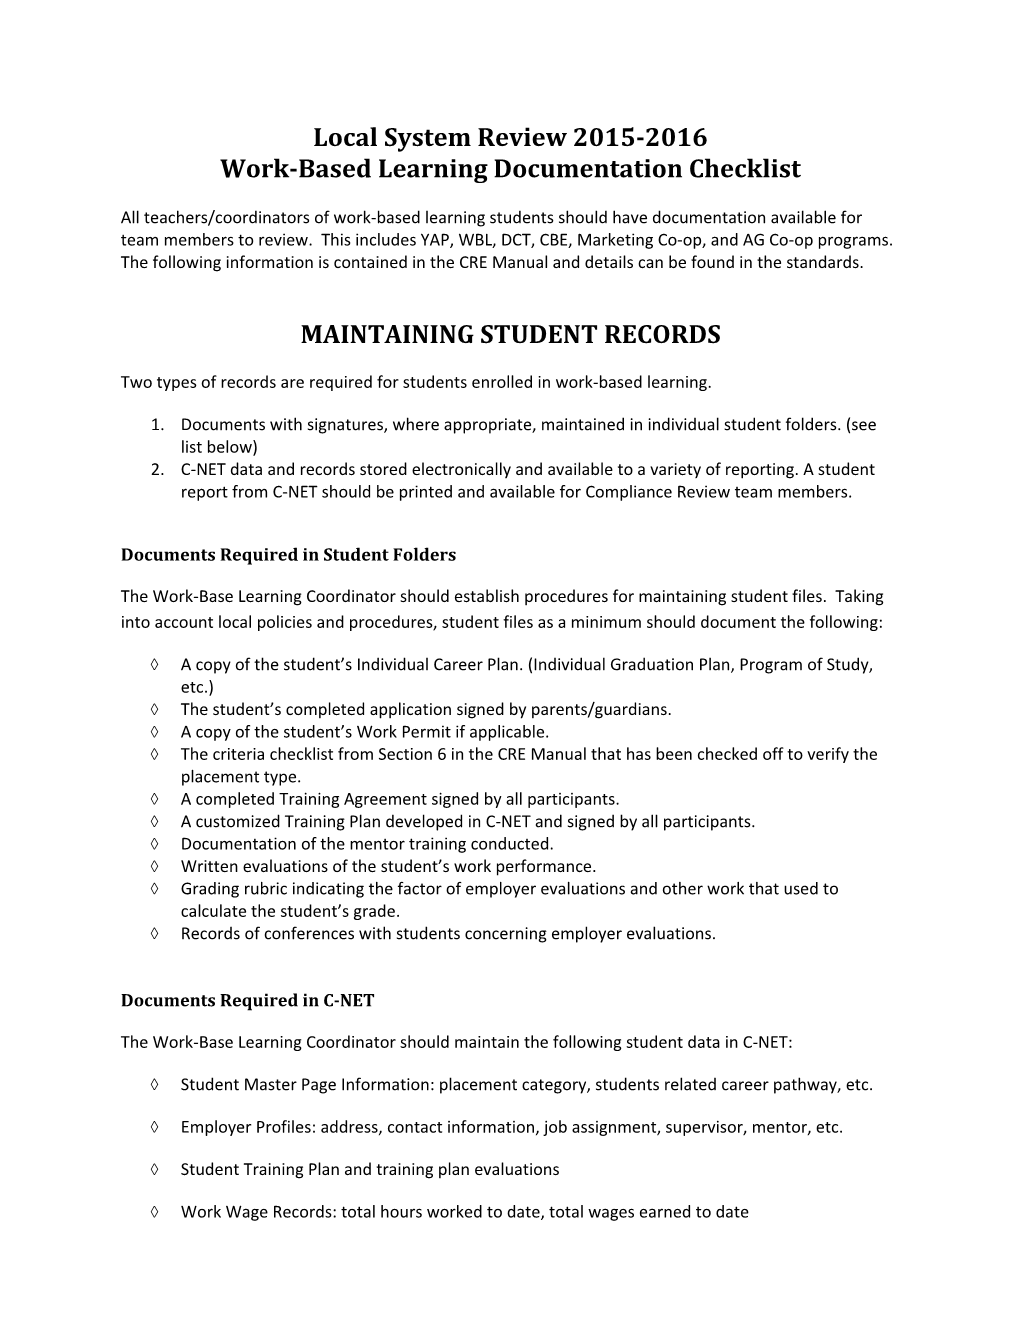 Work-Based Learning Documentation Checklist